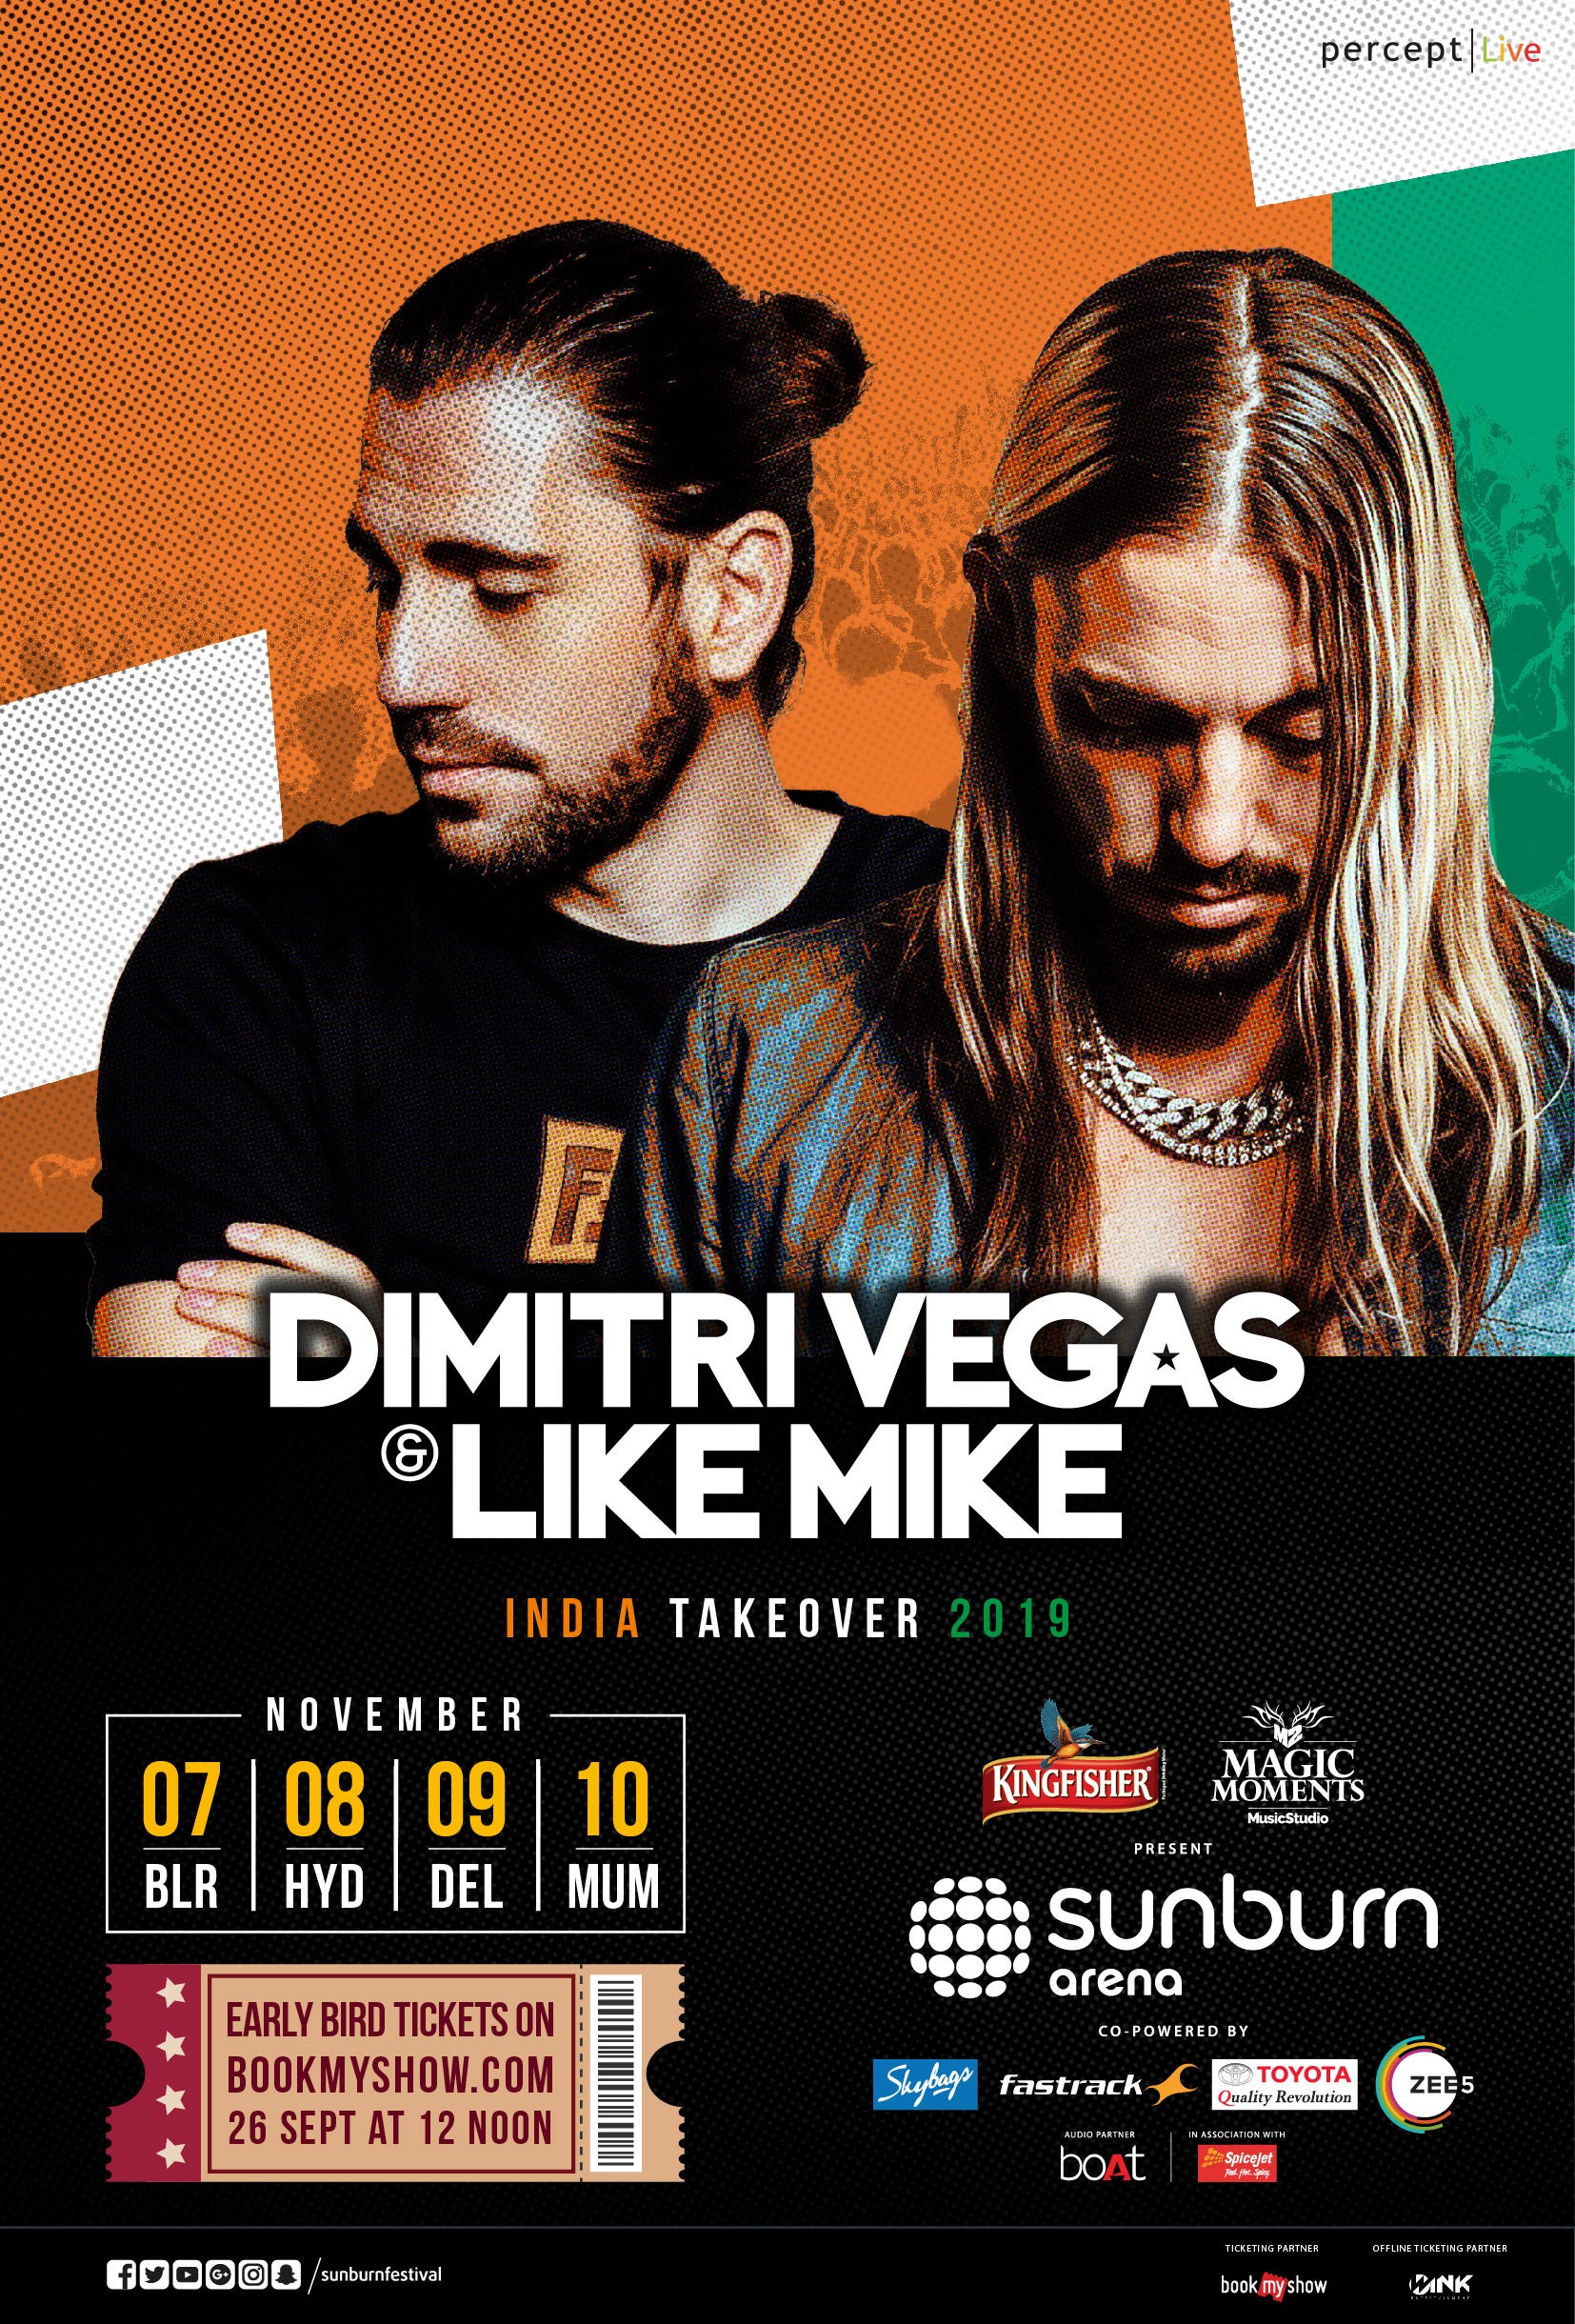 Dimitri Vegas Like Mike Announce India Tour With Sunburn Arena